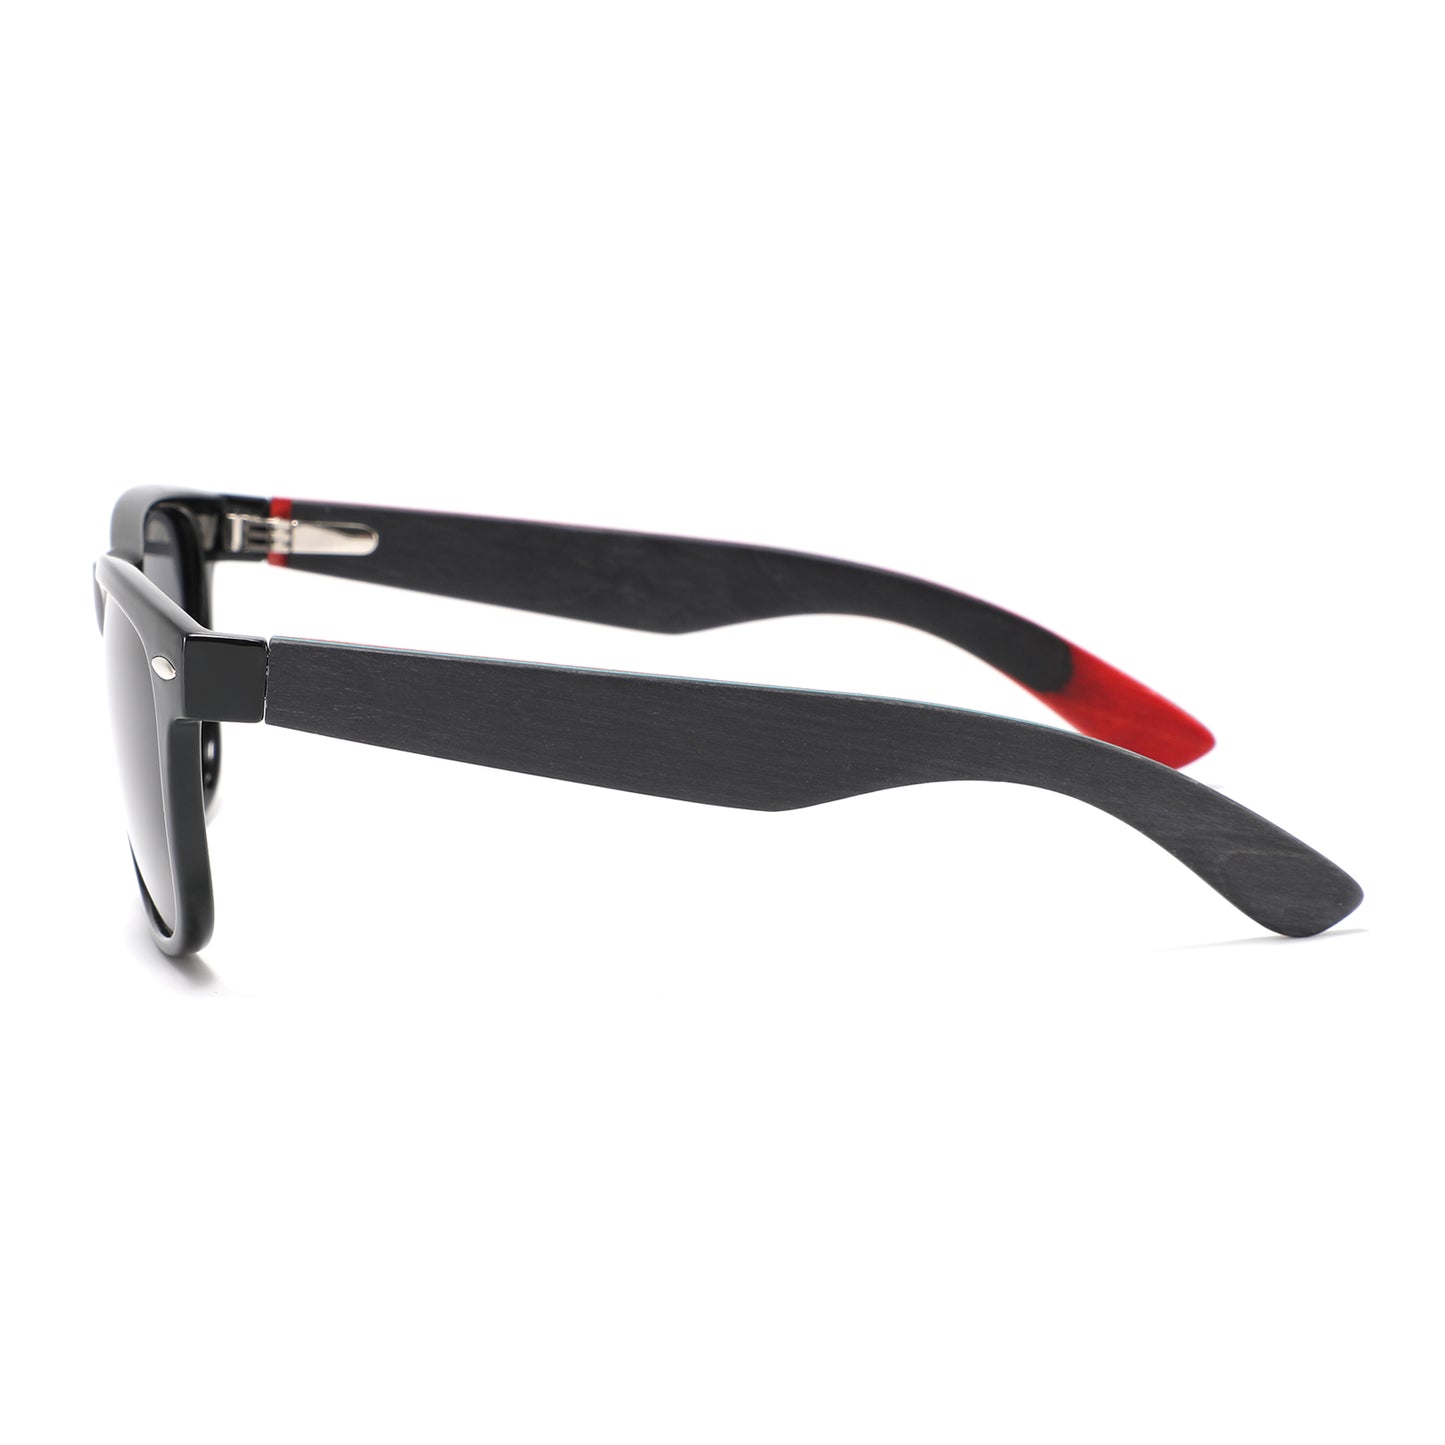 VAYA BLACK SKATEBOARD Sunglasses Polarised Grey Lens Wooden Arms